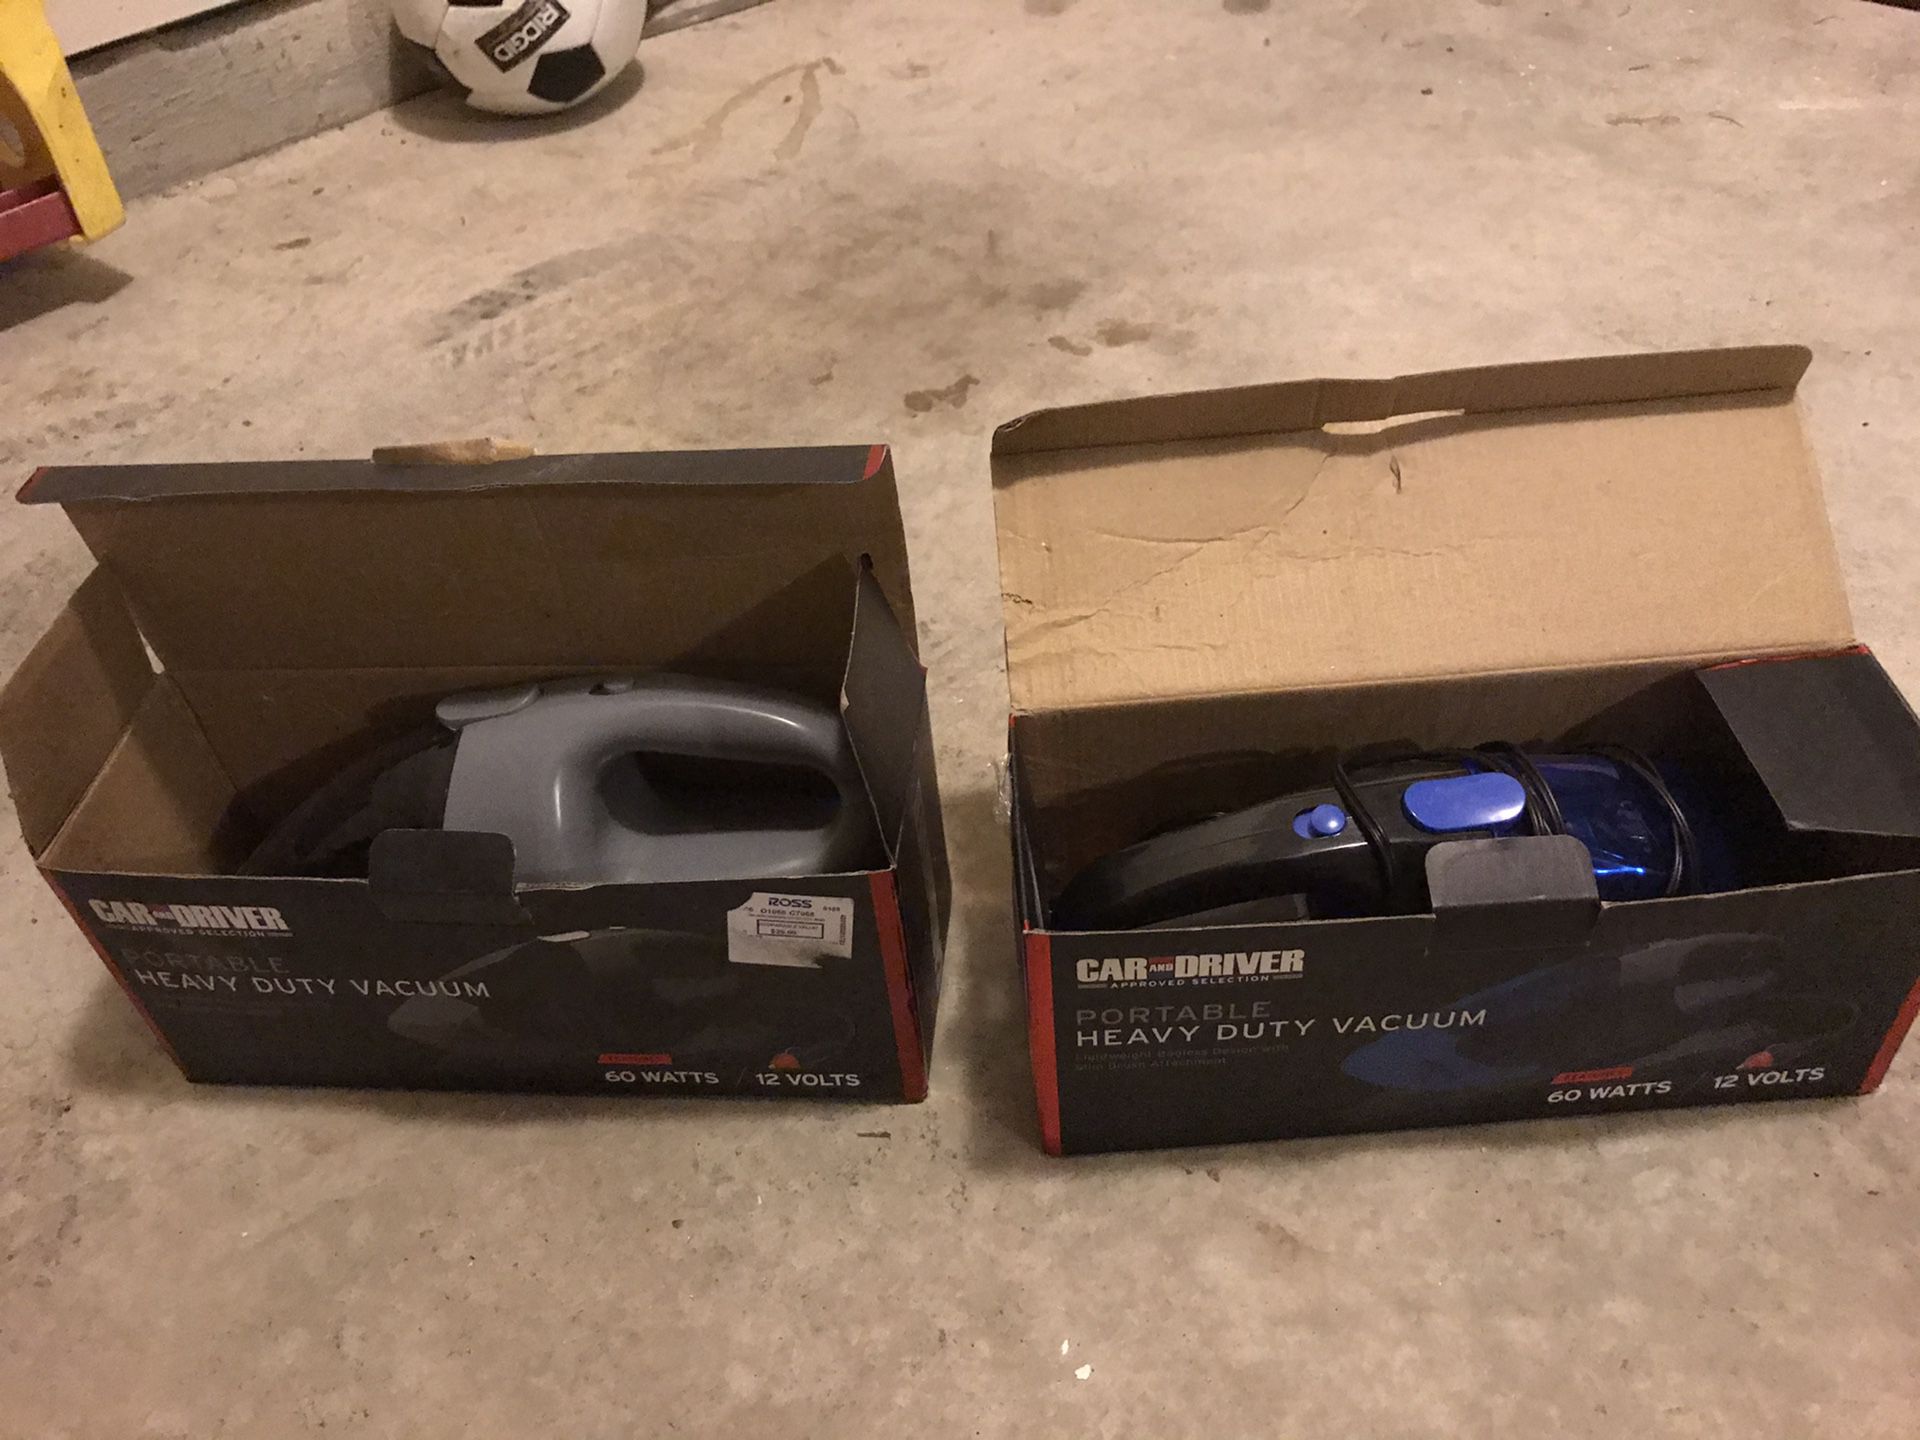 Car Handheld vacuums